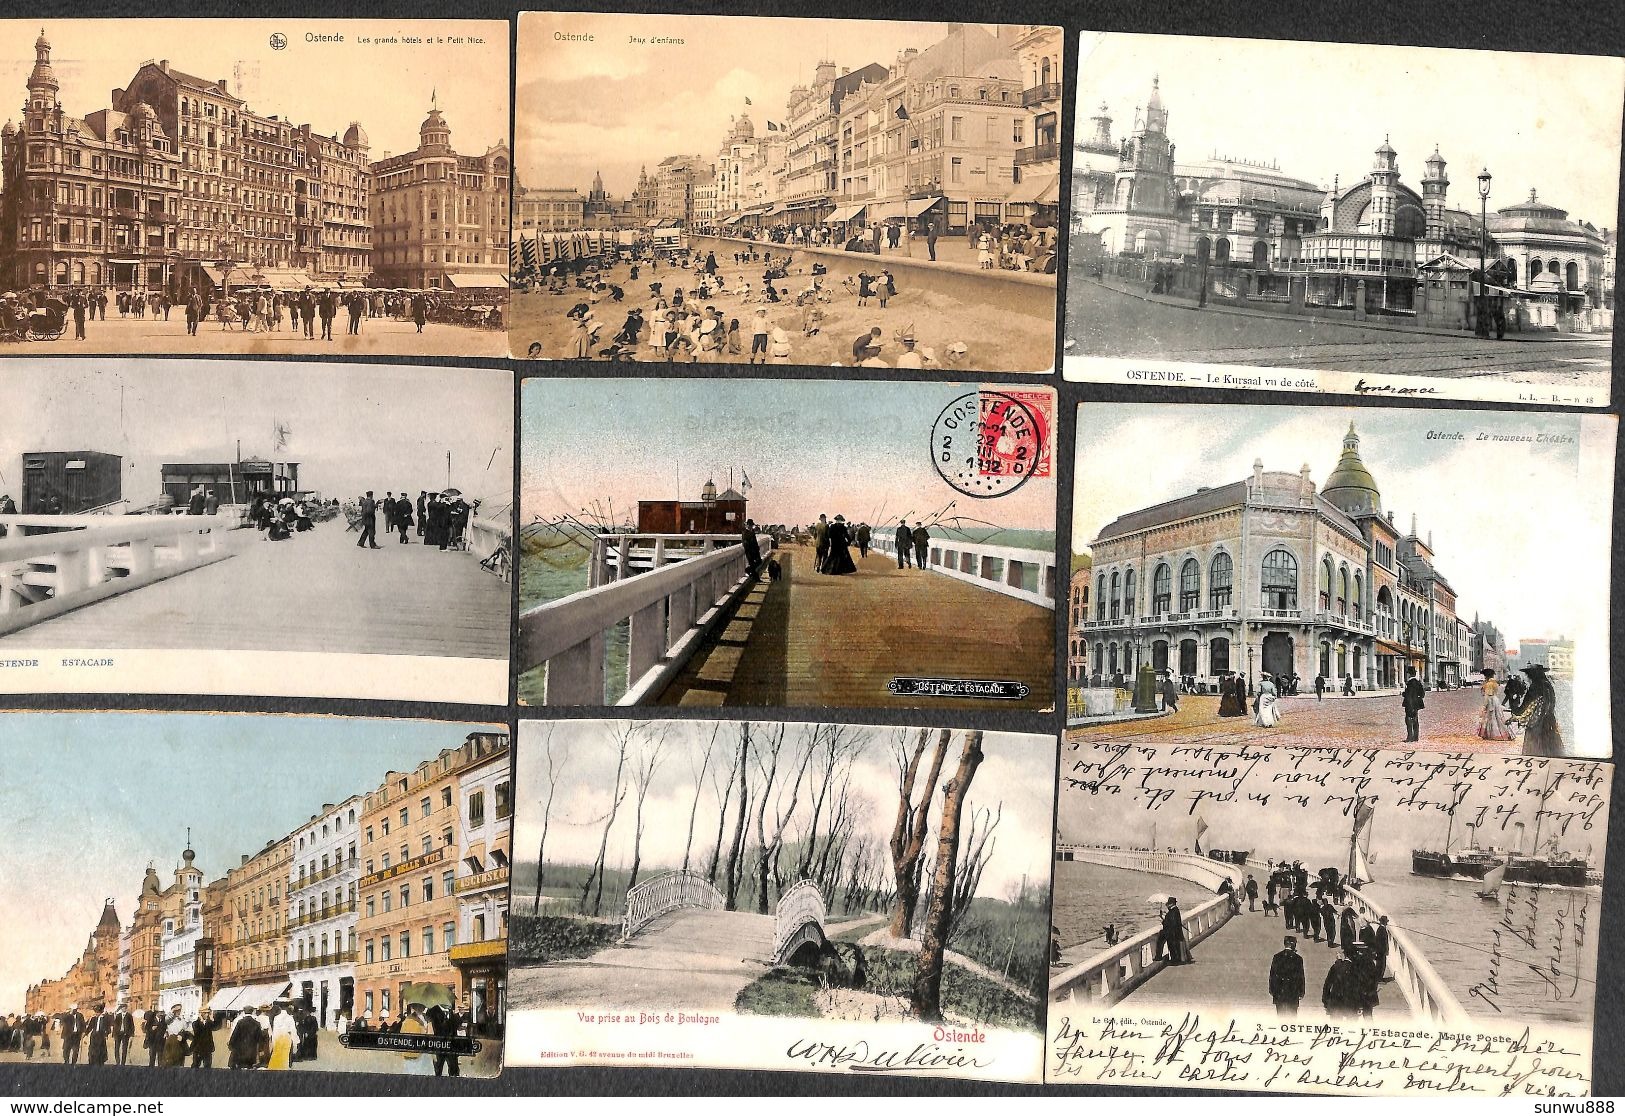 Ostende Oostende - Lot 62 cartes PK's (animée, précurseur, gare, Trenkler, pêcheurs, tram, aquacycle)